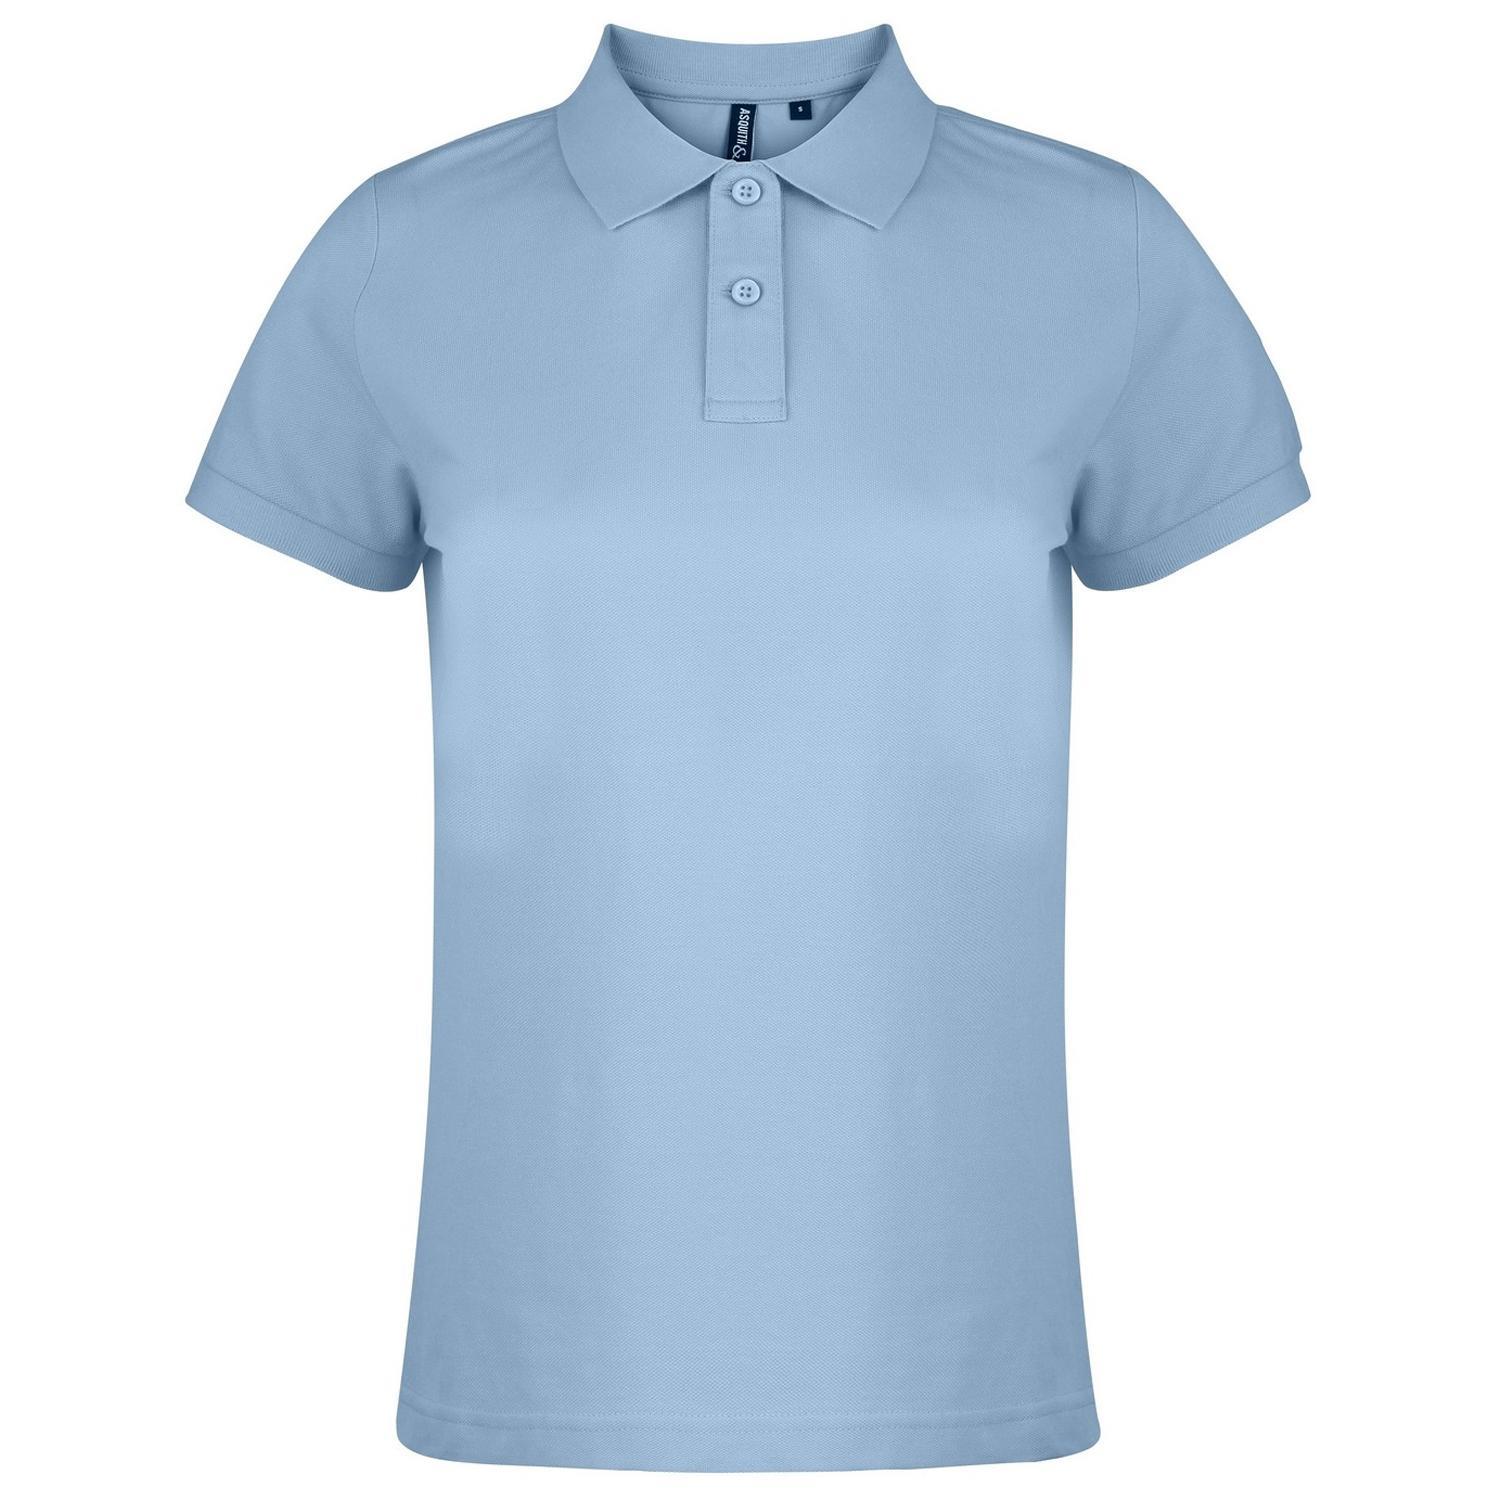 Asquith & Fox Womens/Ladies Plain Short Sleeve Polo Shirt (Sky) (M)